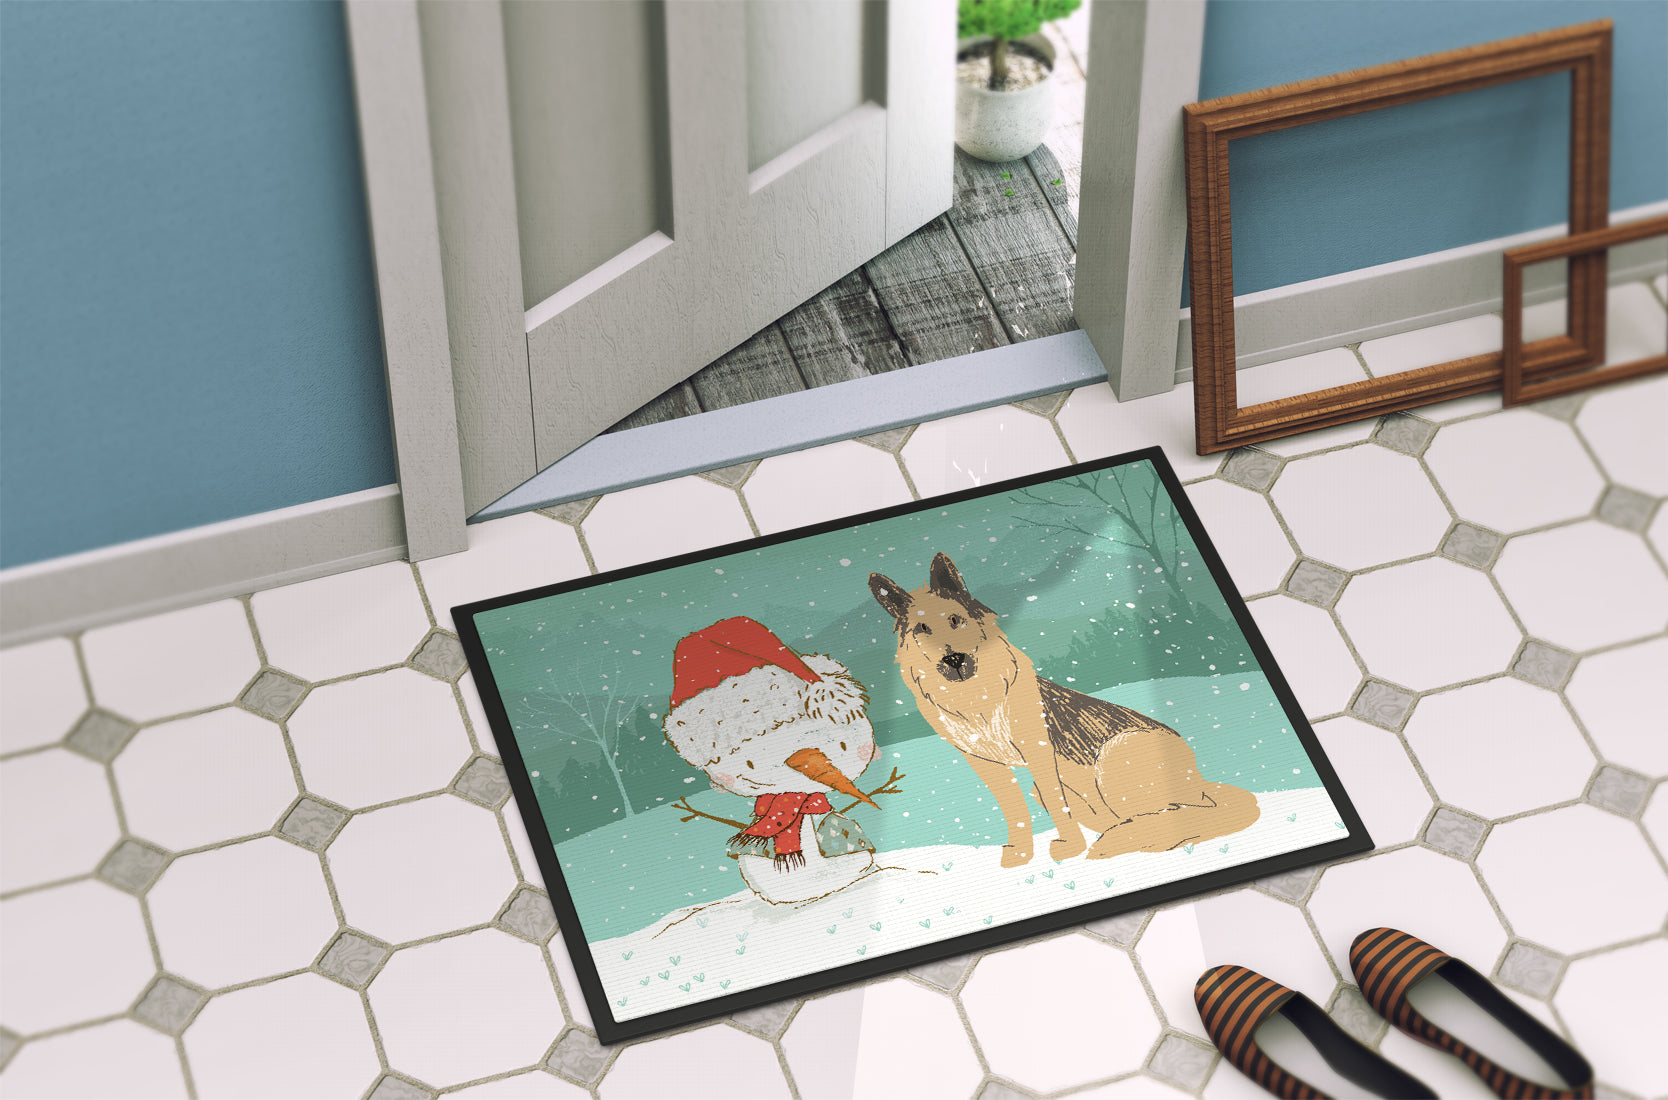 German Shepherd and Snowman Christmas Indoor or Outdoor Mat 18x27 CK2033MAT - the-store.com